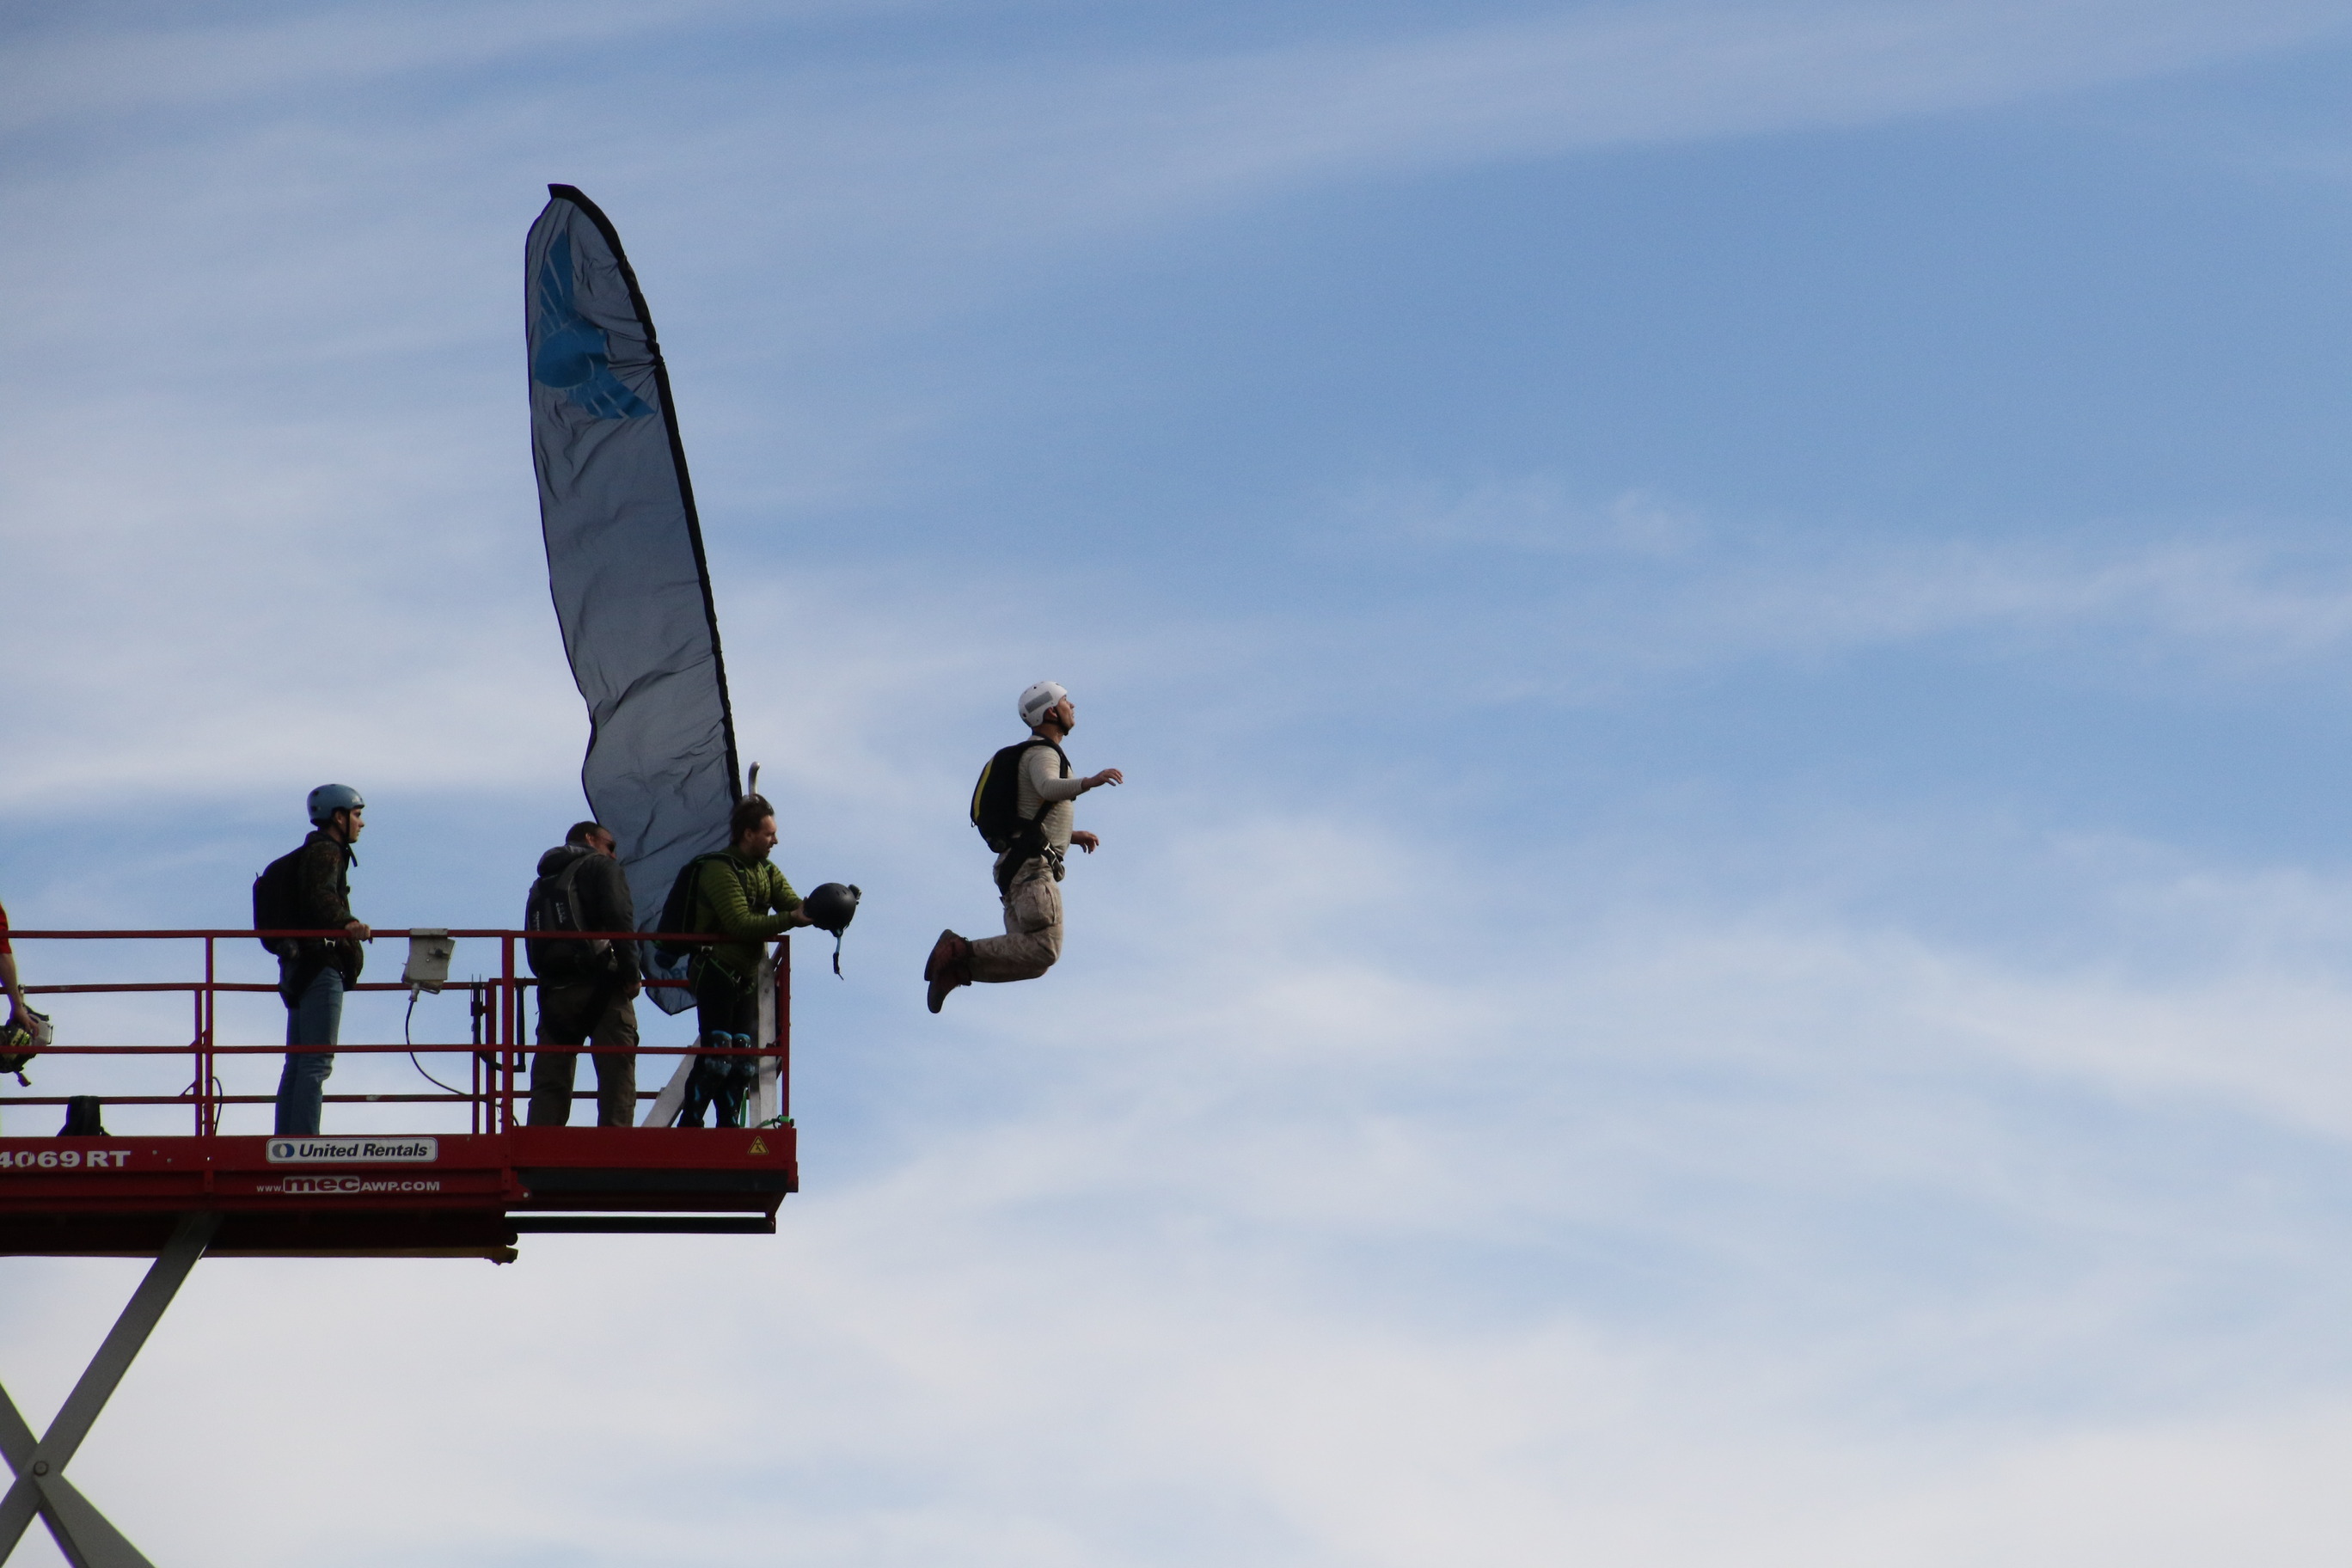 base jumper jumping off platform into the air